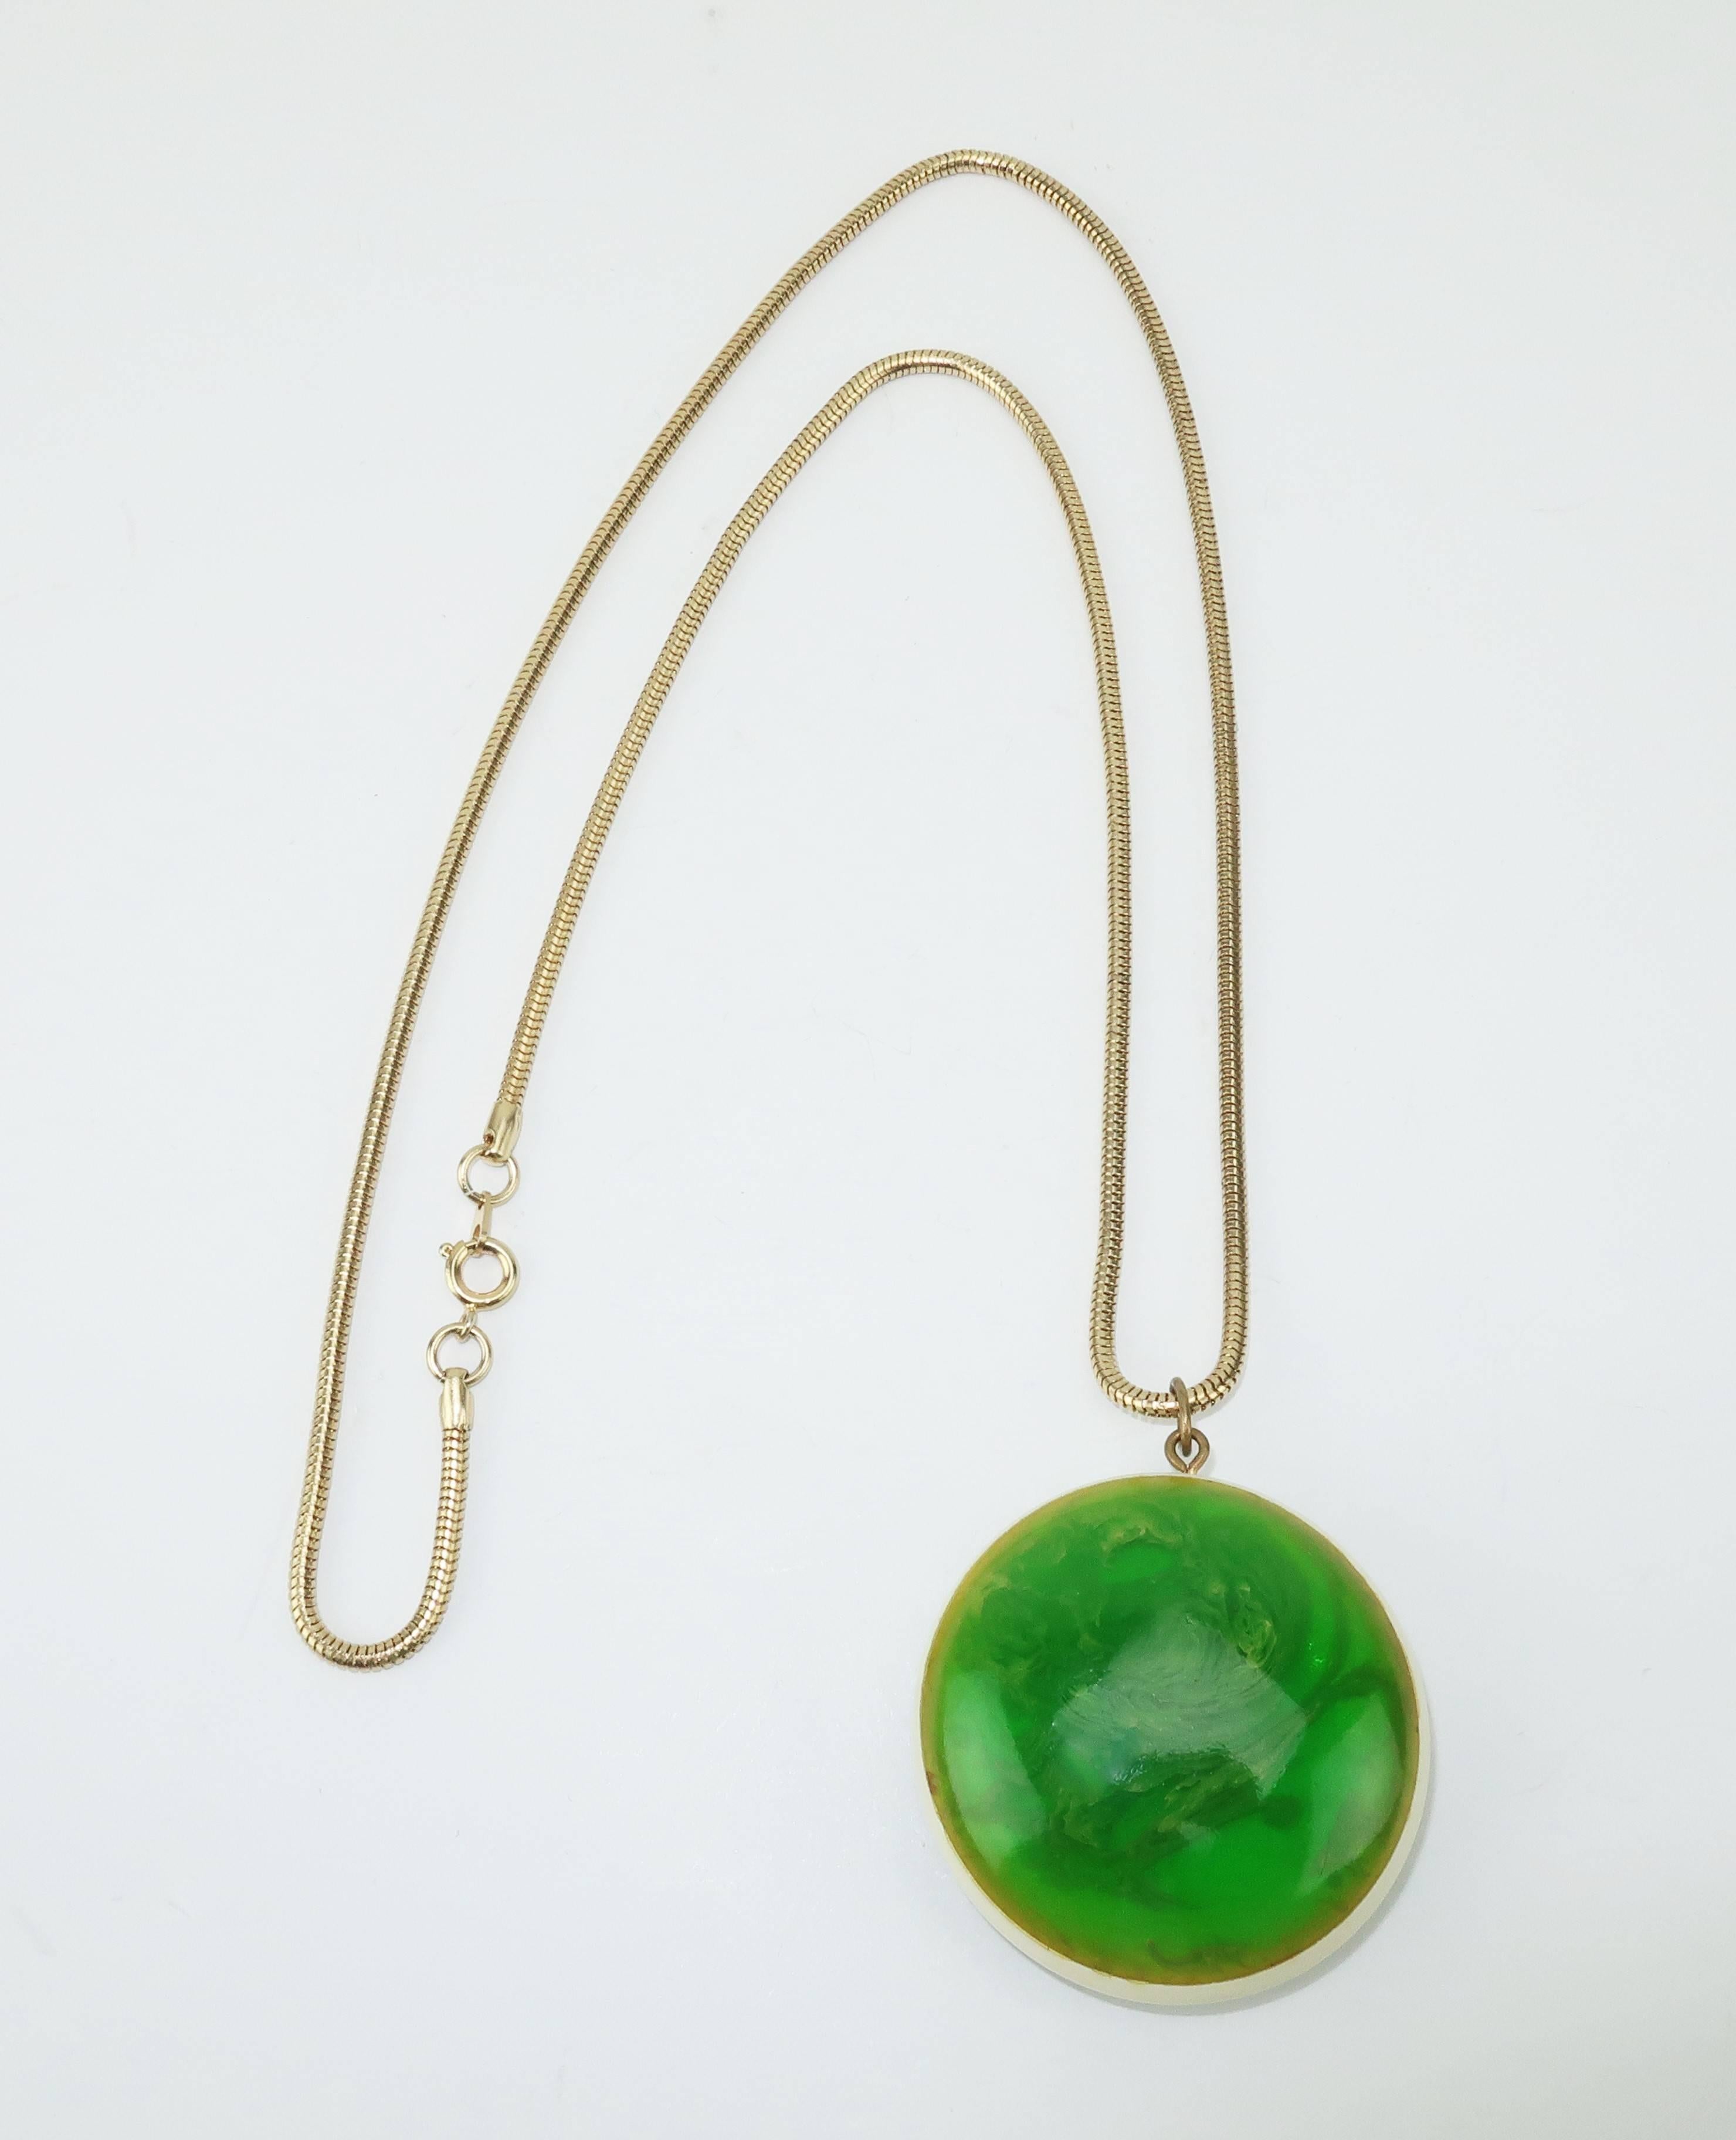 Mod Green Marbled Acrylic Pendant Necklace, circa 1970  1